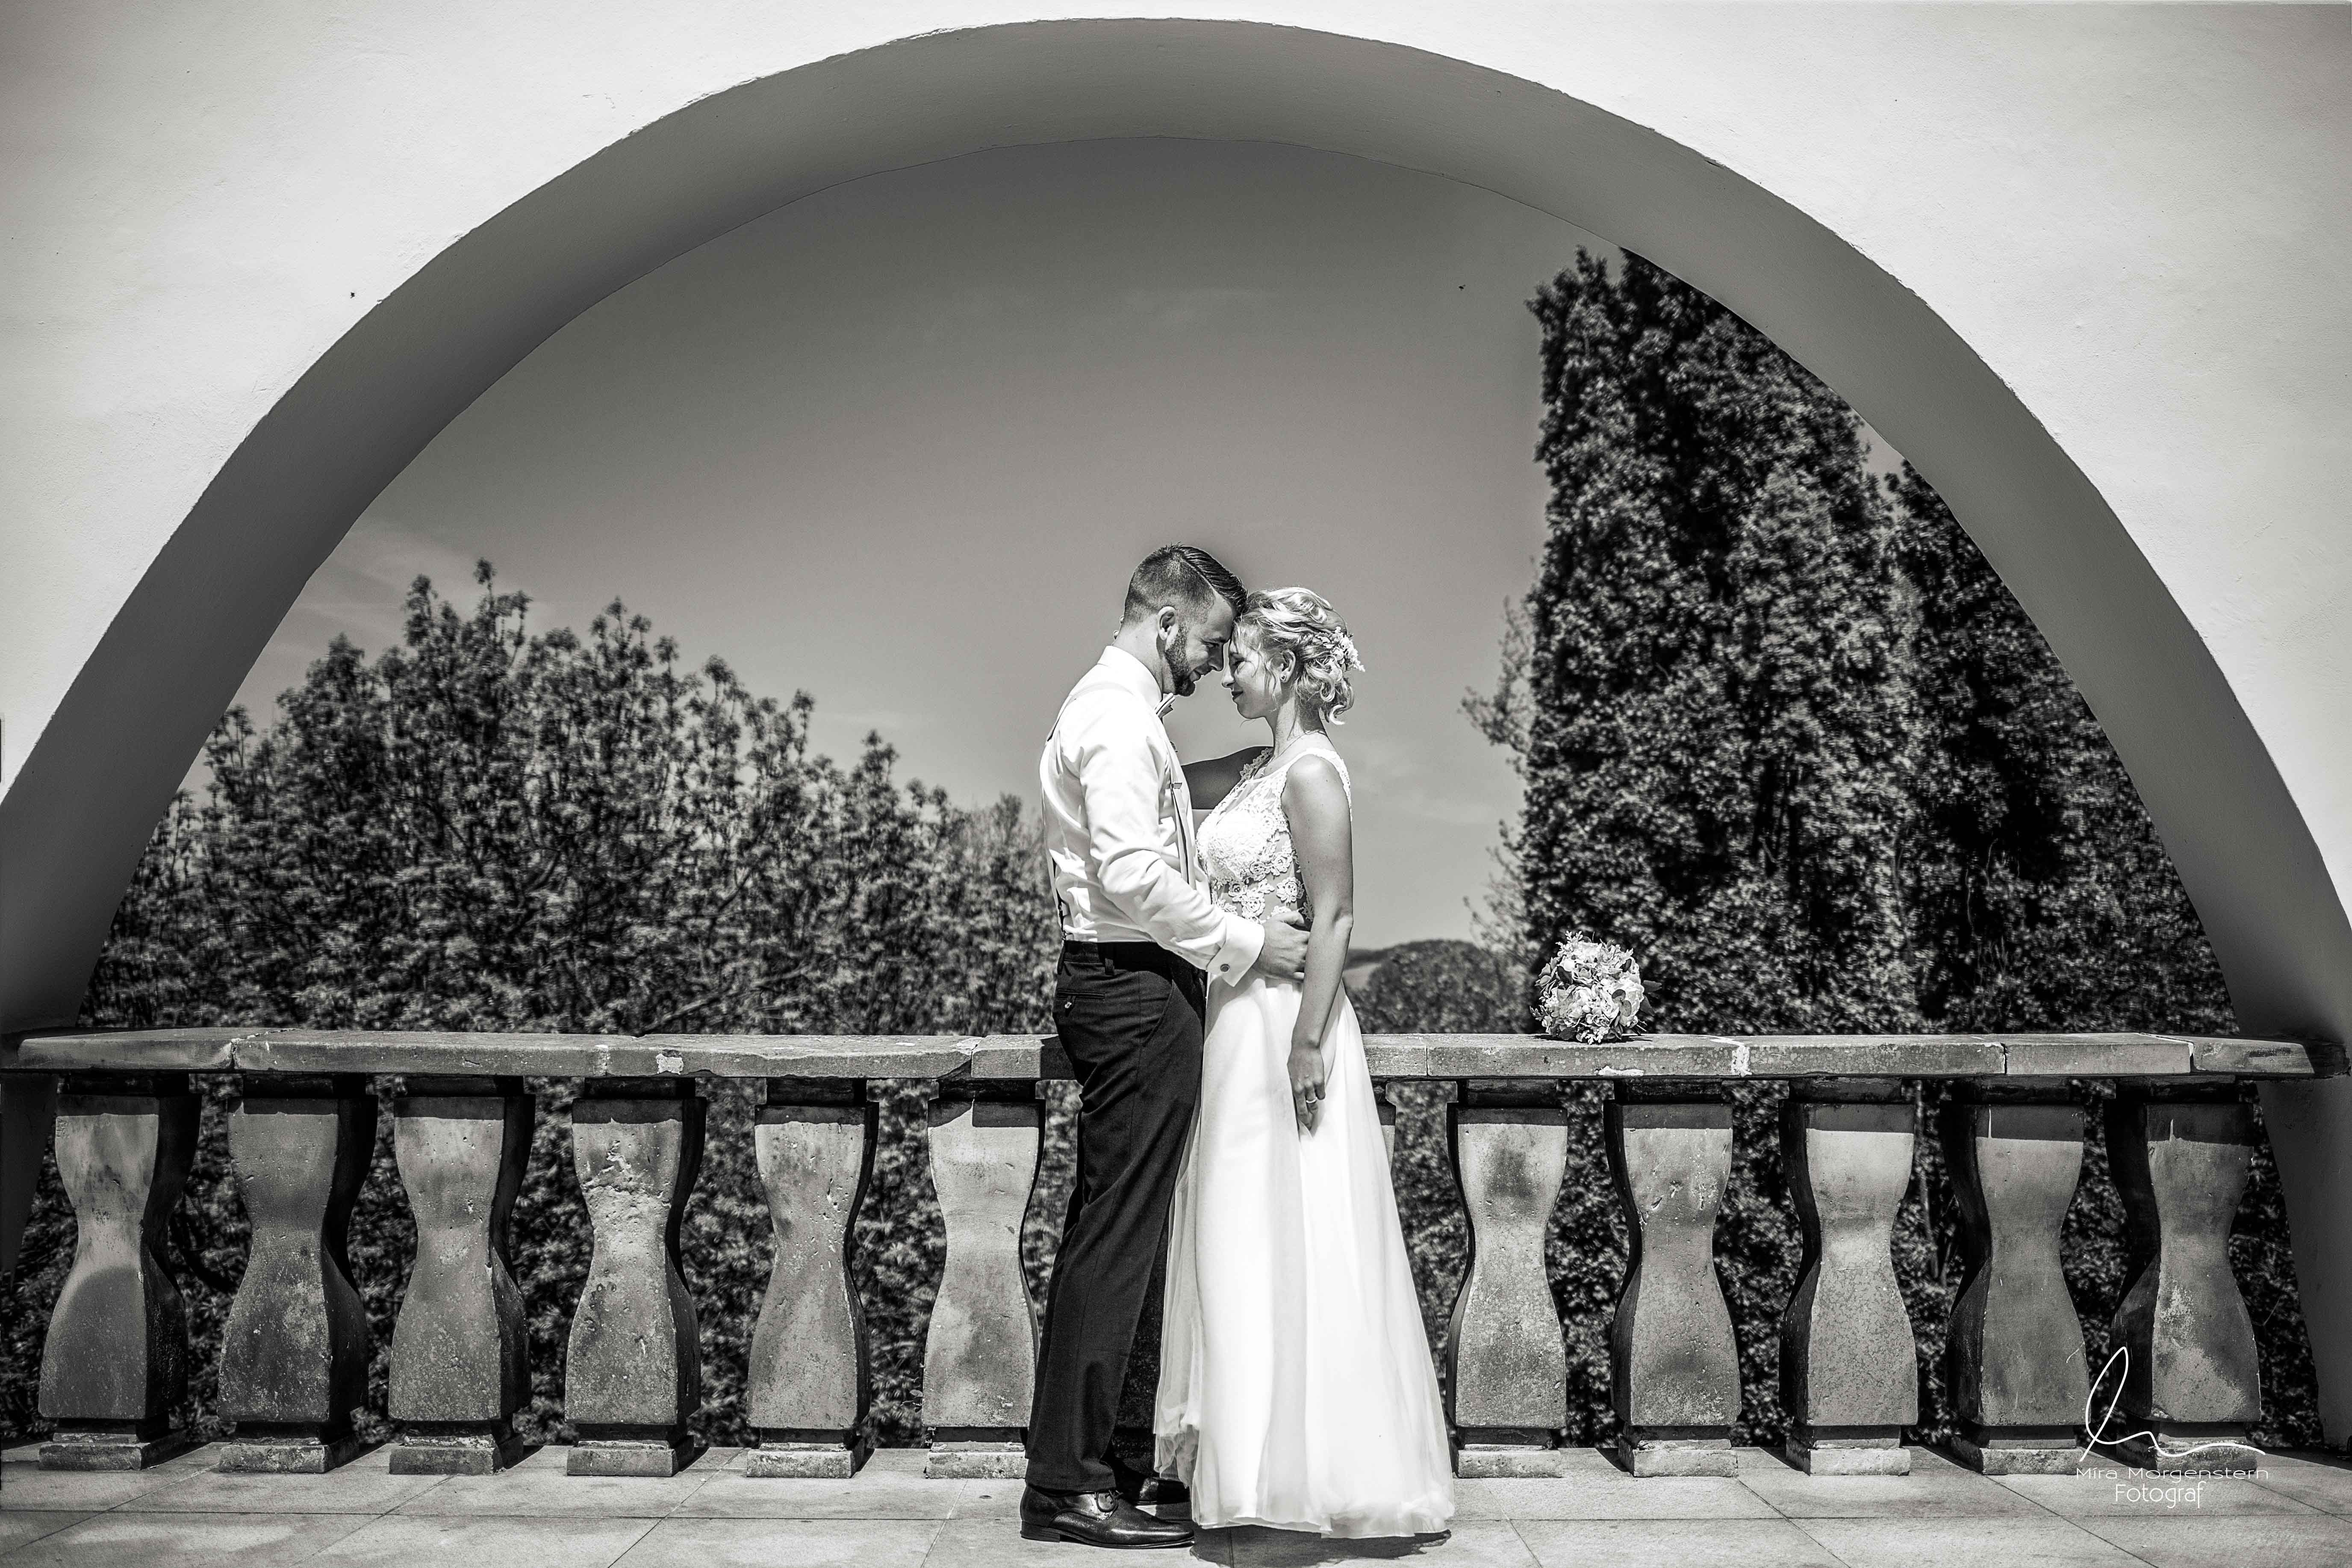 svatební fotograf , svatební fotograf praha, fotograf na svatbu